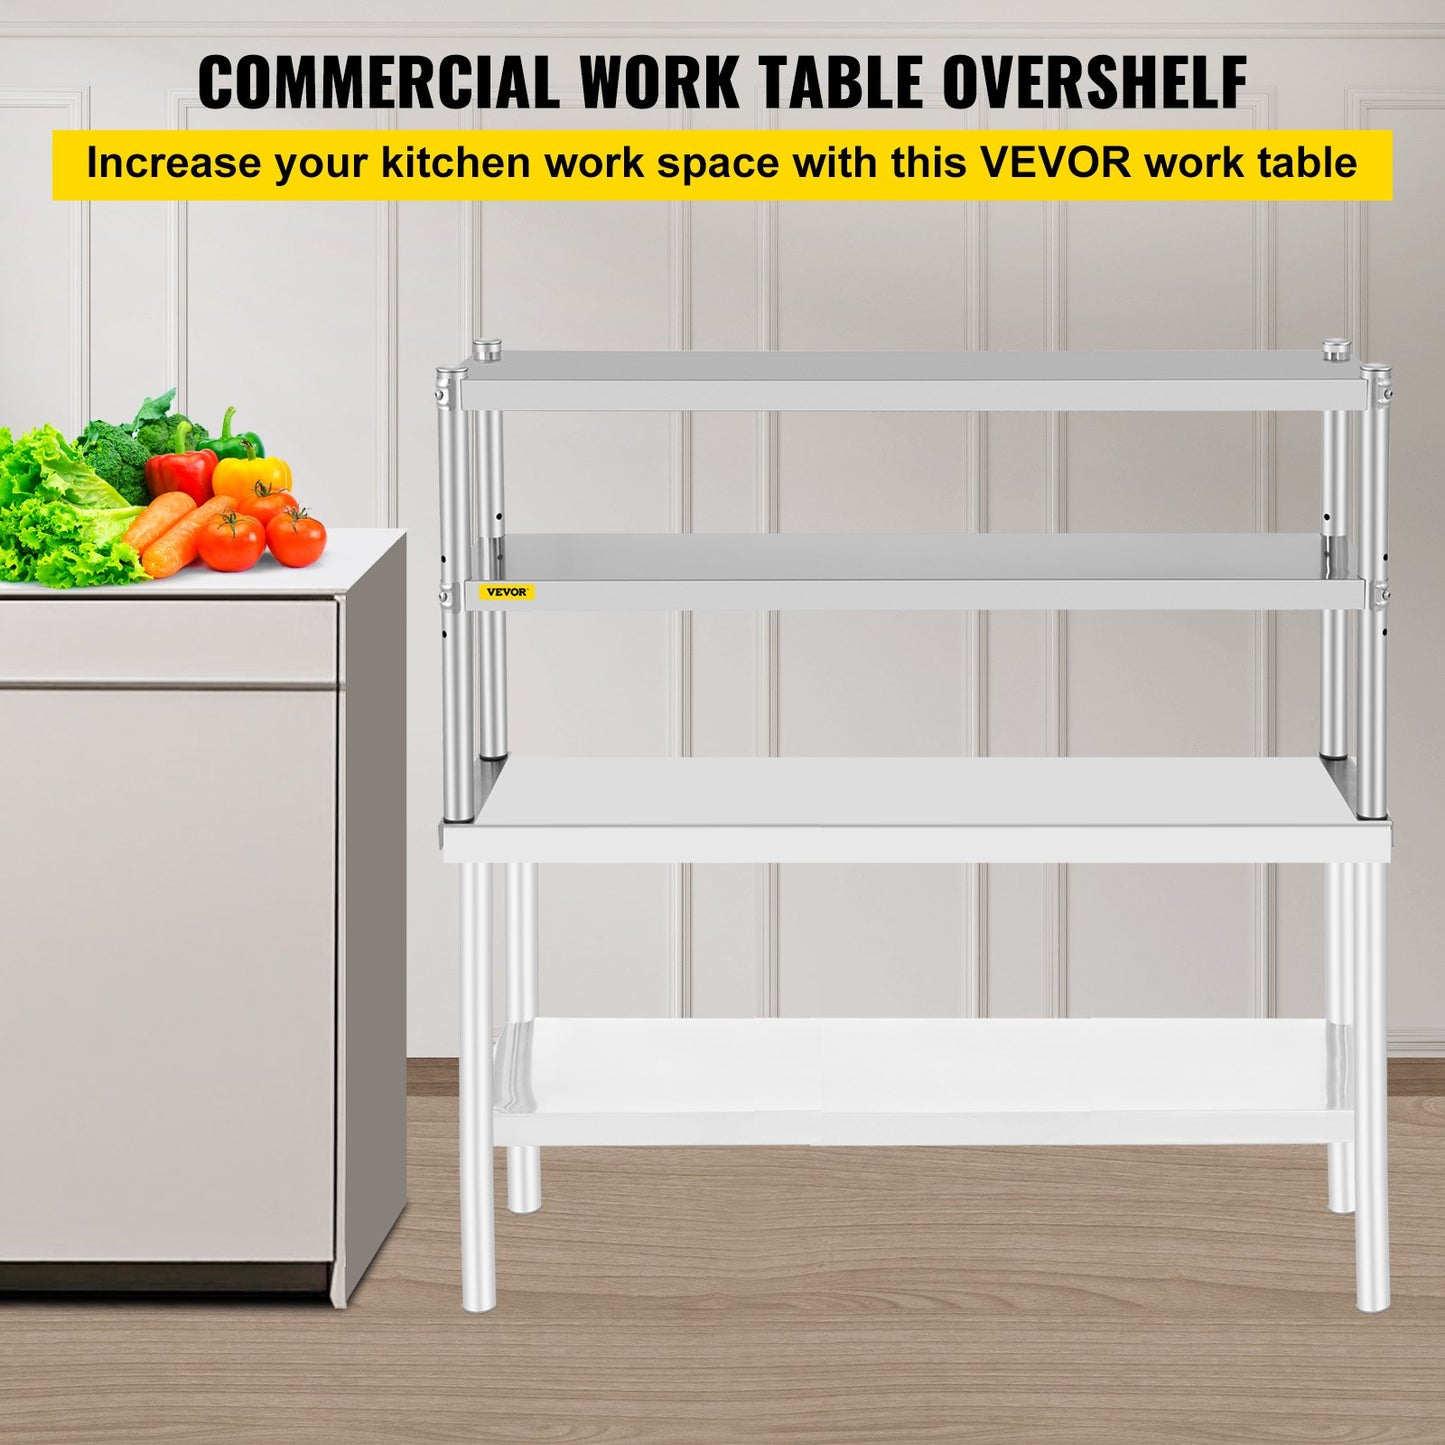 VEVOR Double Overshelf, Double Tier Stainless Steel Overshelf, 48 x 12 x 24 in Double Deck Overshelf, Height Adjustable Overshelf for Prep & Work Table in Kitchen, Restaurant-0